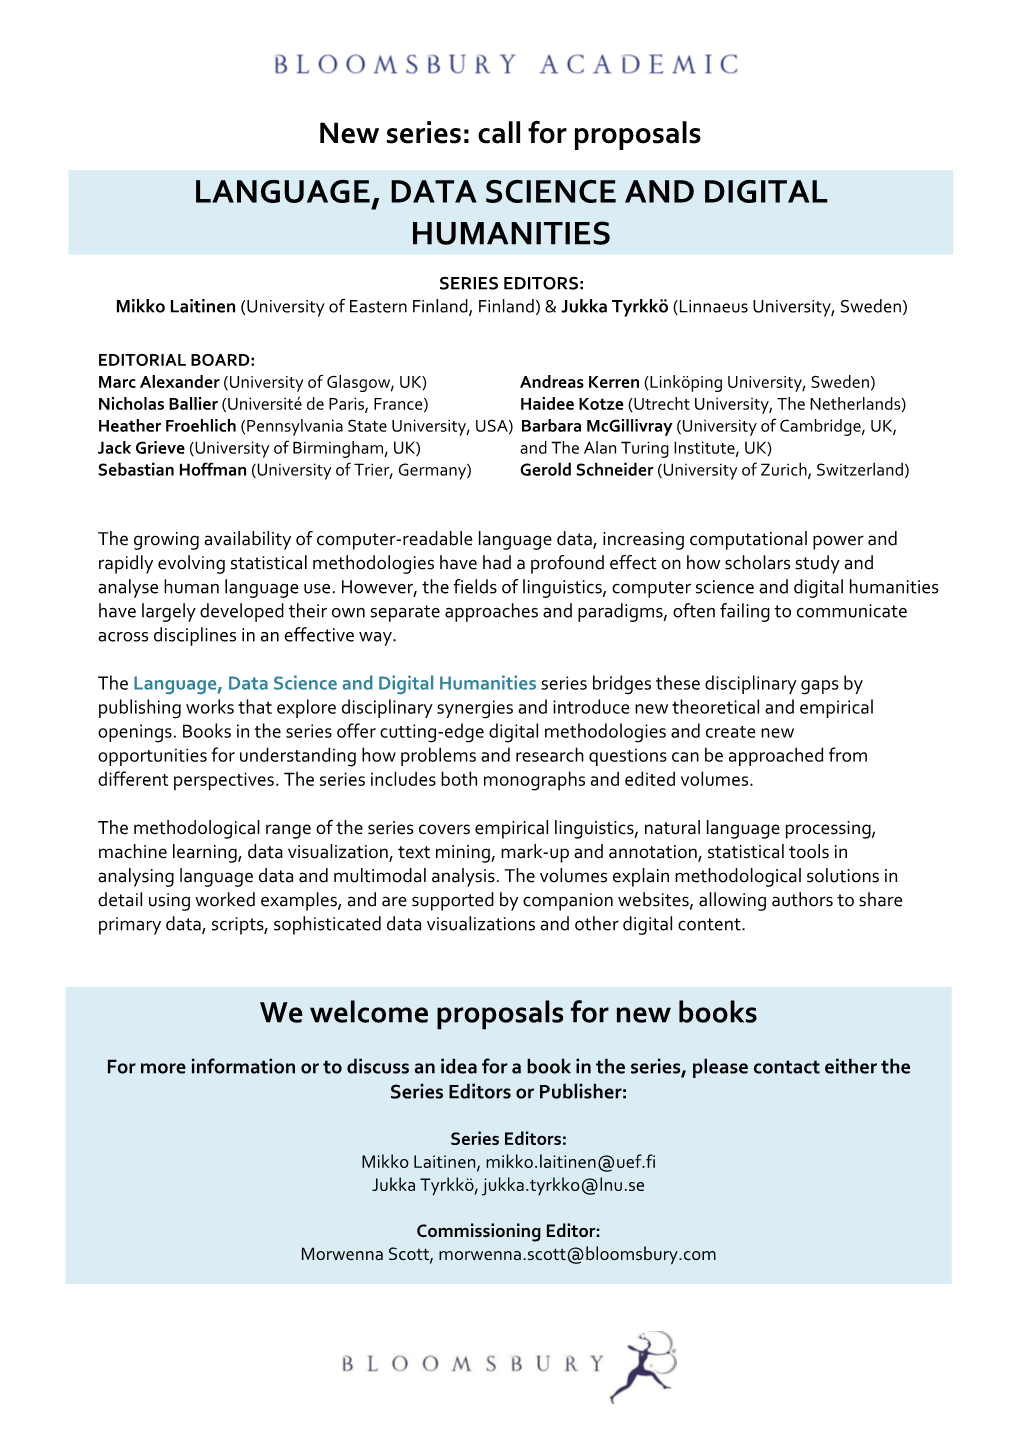 Language, Data Science and Digital Humanities